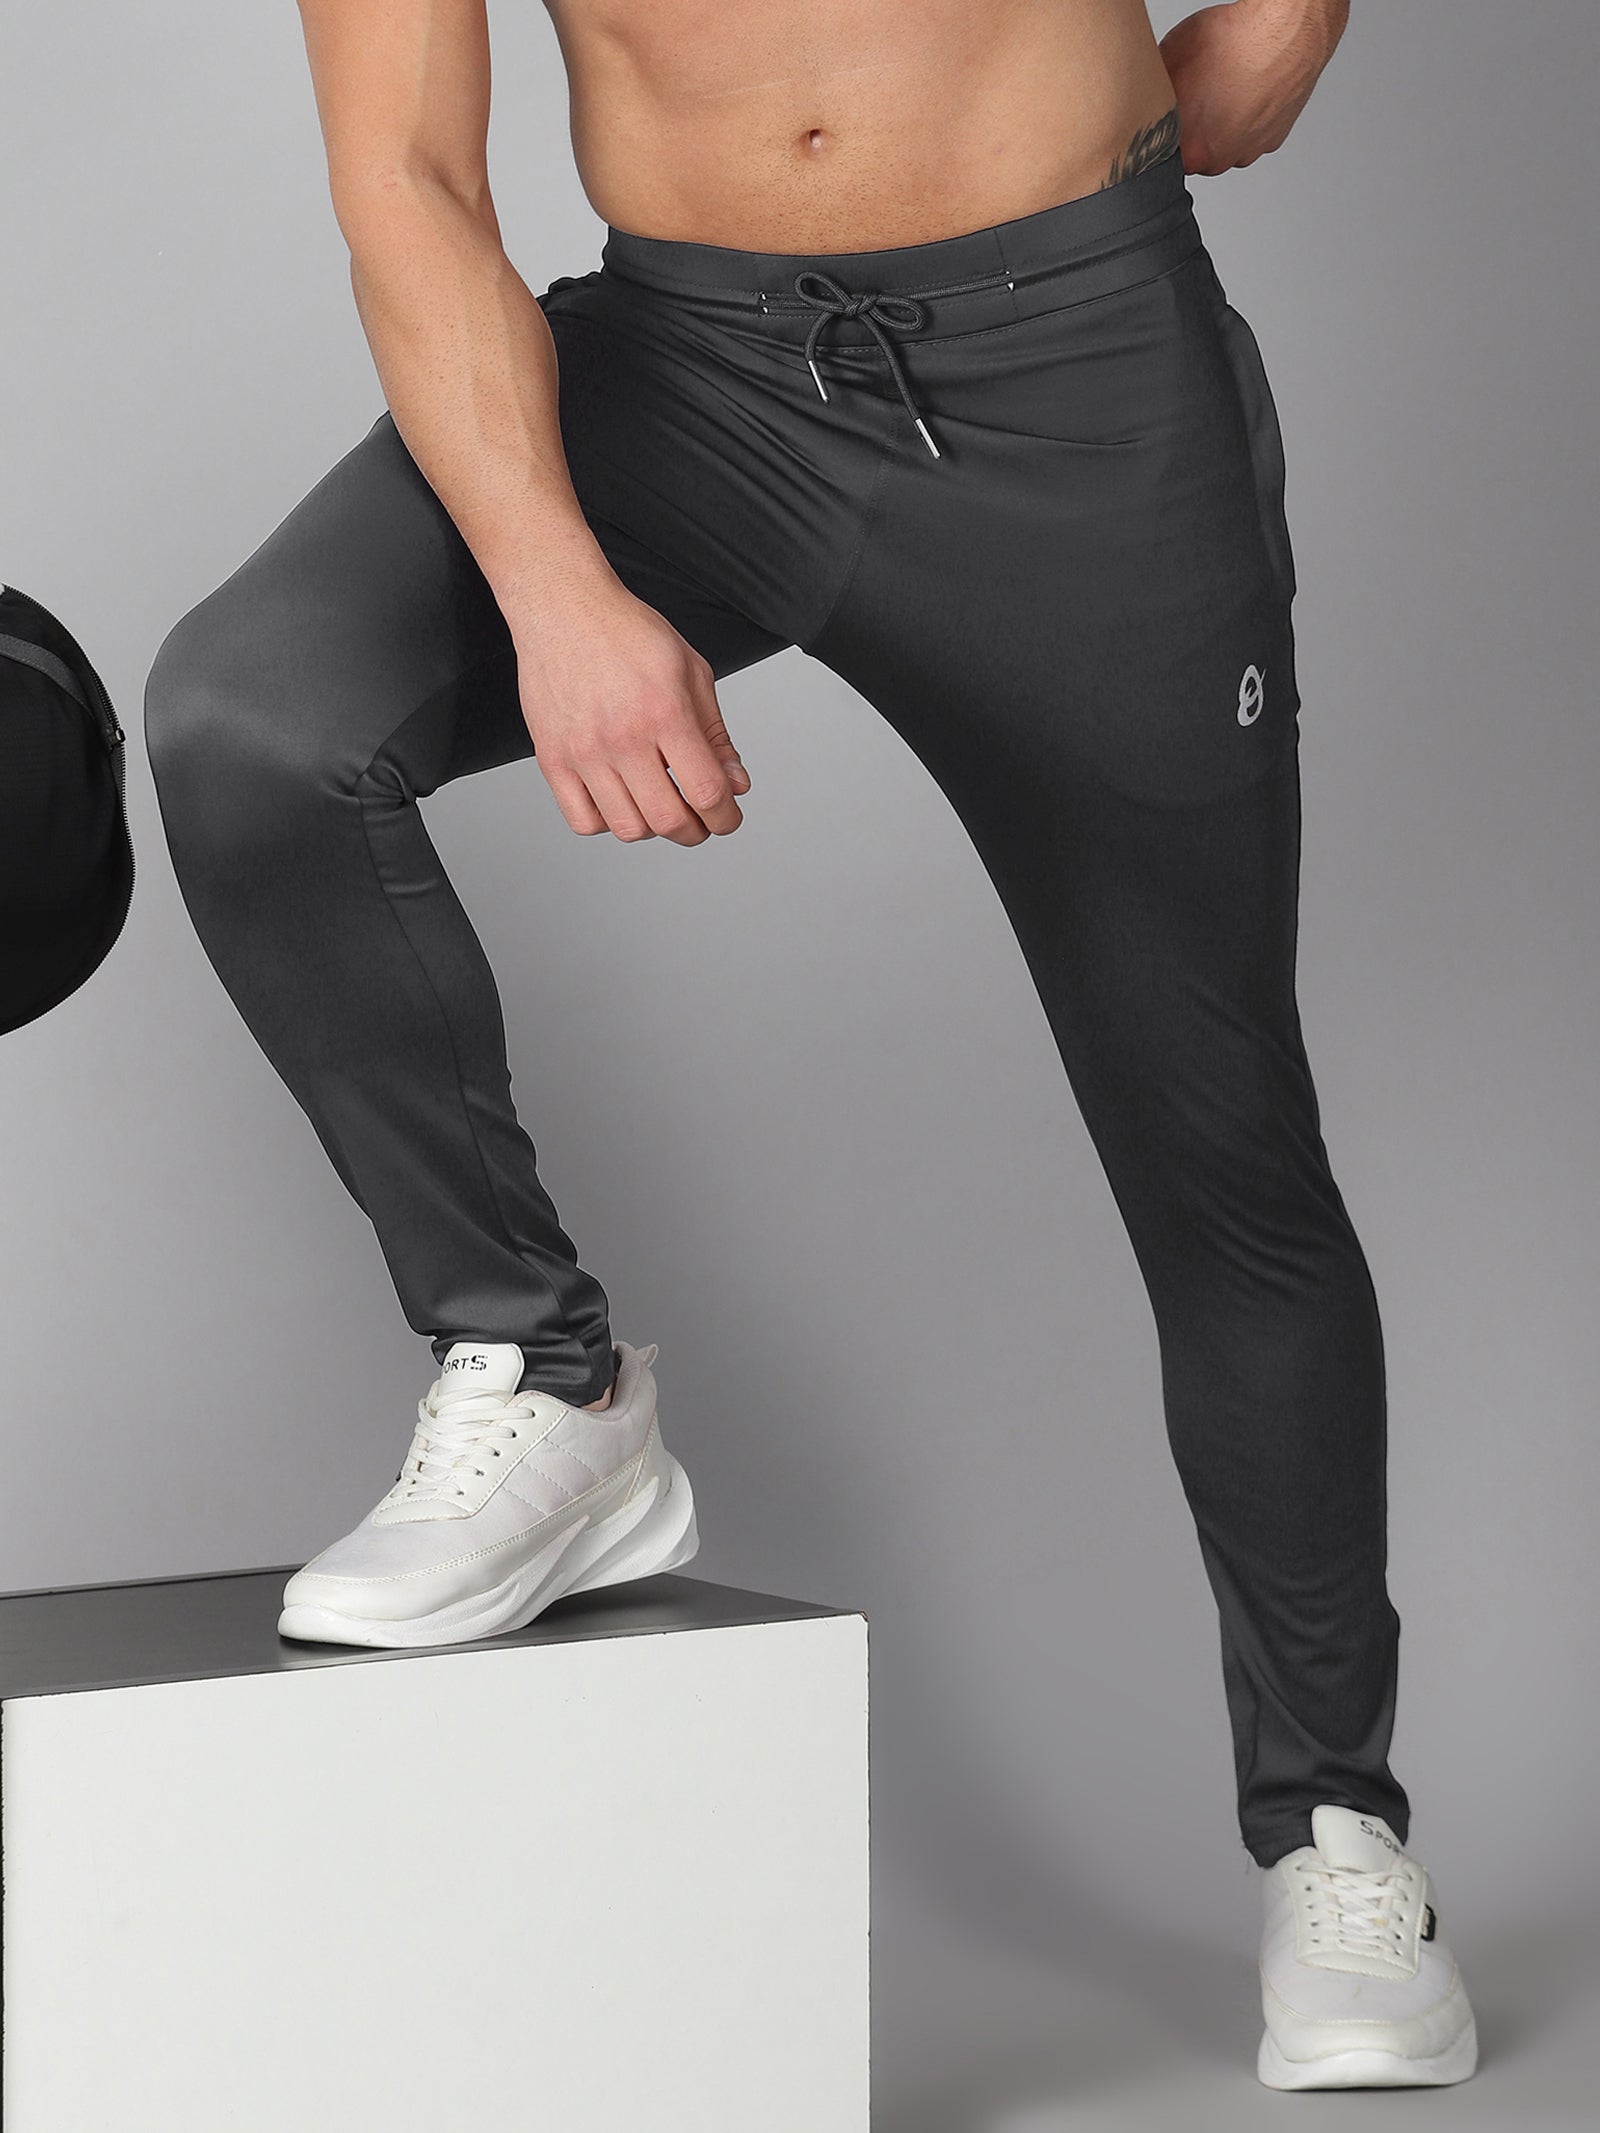 WSSBK New Pants Men Sport Sweatpants Running Pants Men Fitness Joggers  Track Pants Slim Fit Pants Bodybuilding Trouser (Color : D, Size :  XXXX-Large) price in UAE | Amazon UAE | kanbkam